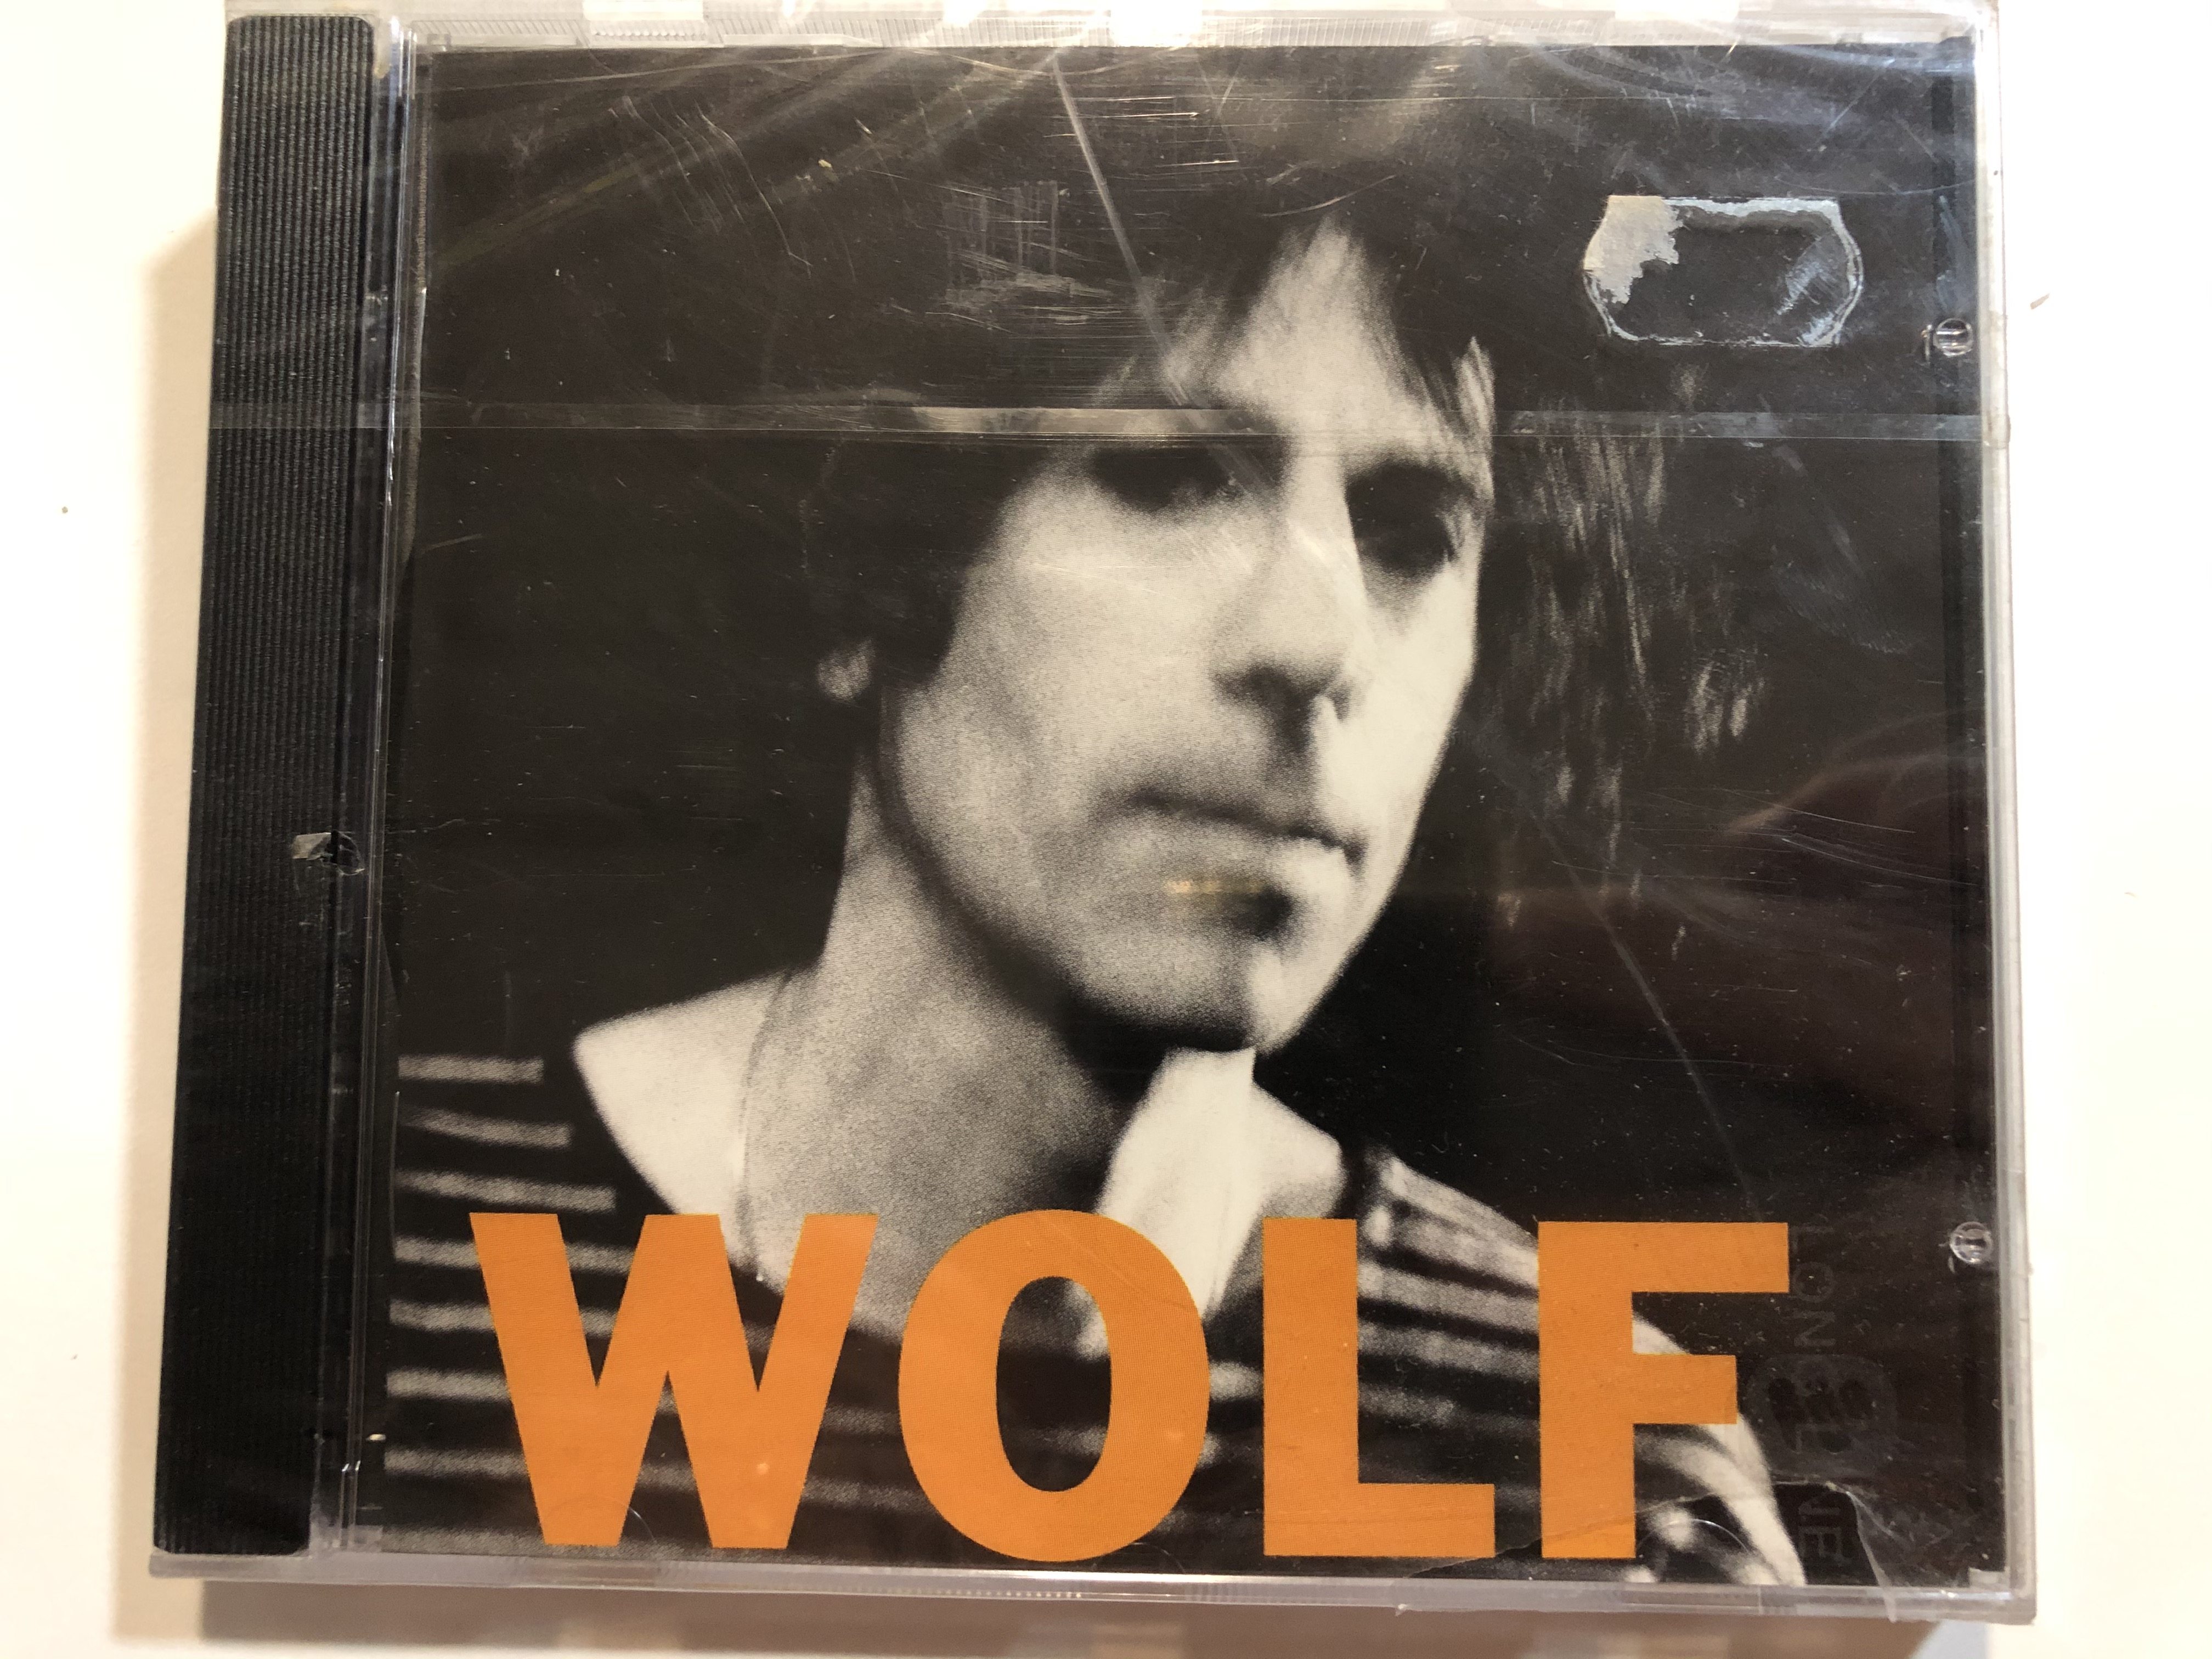 wolf-reprise-records-audio-cd-1996-9-46199-2-1-.jpg